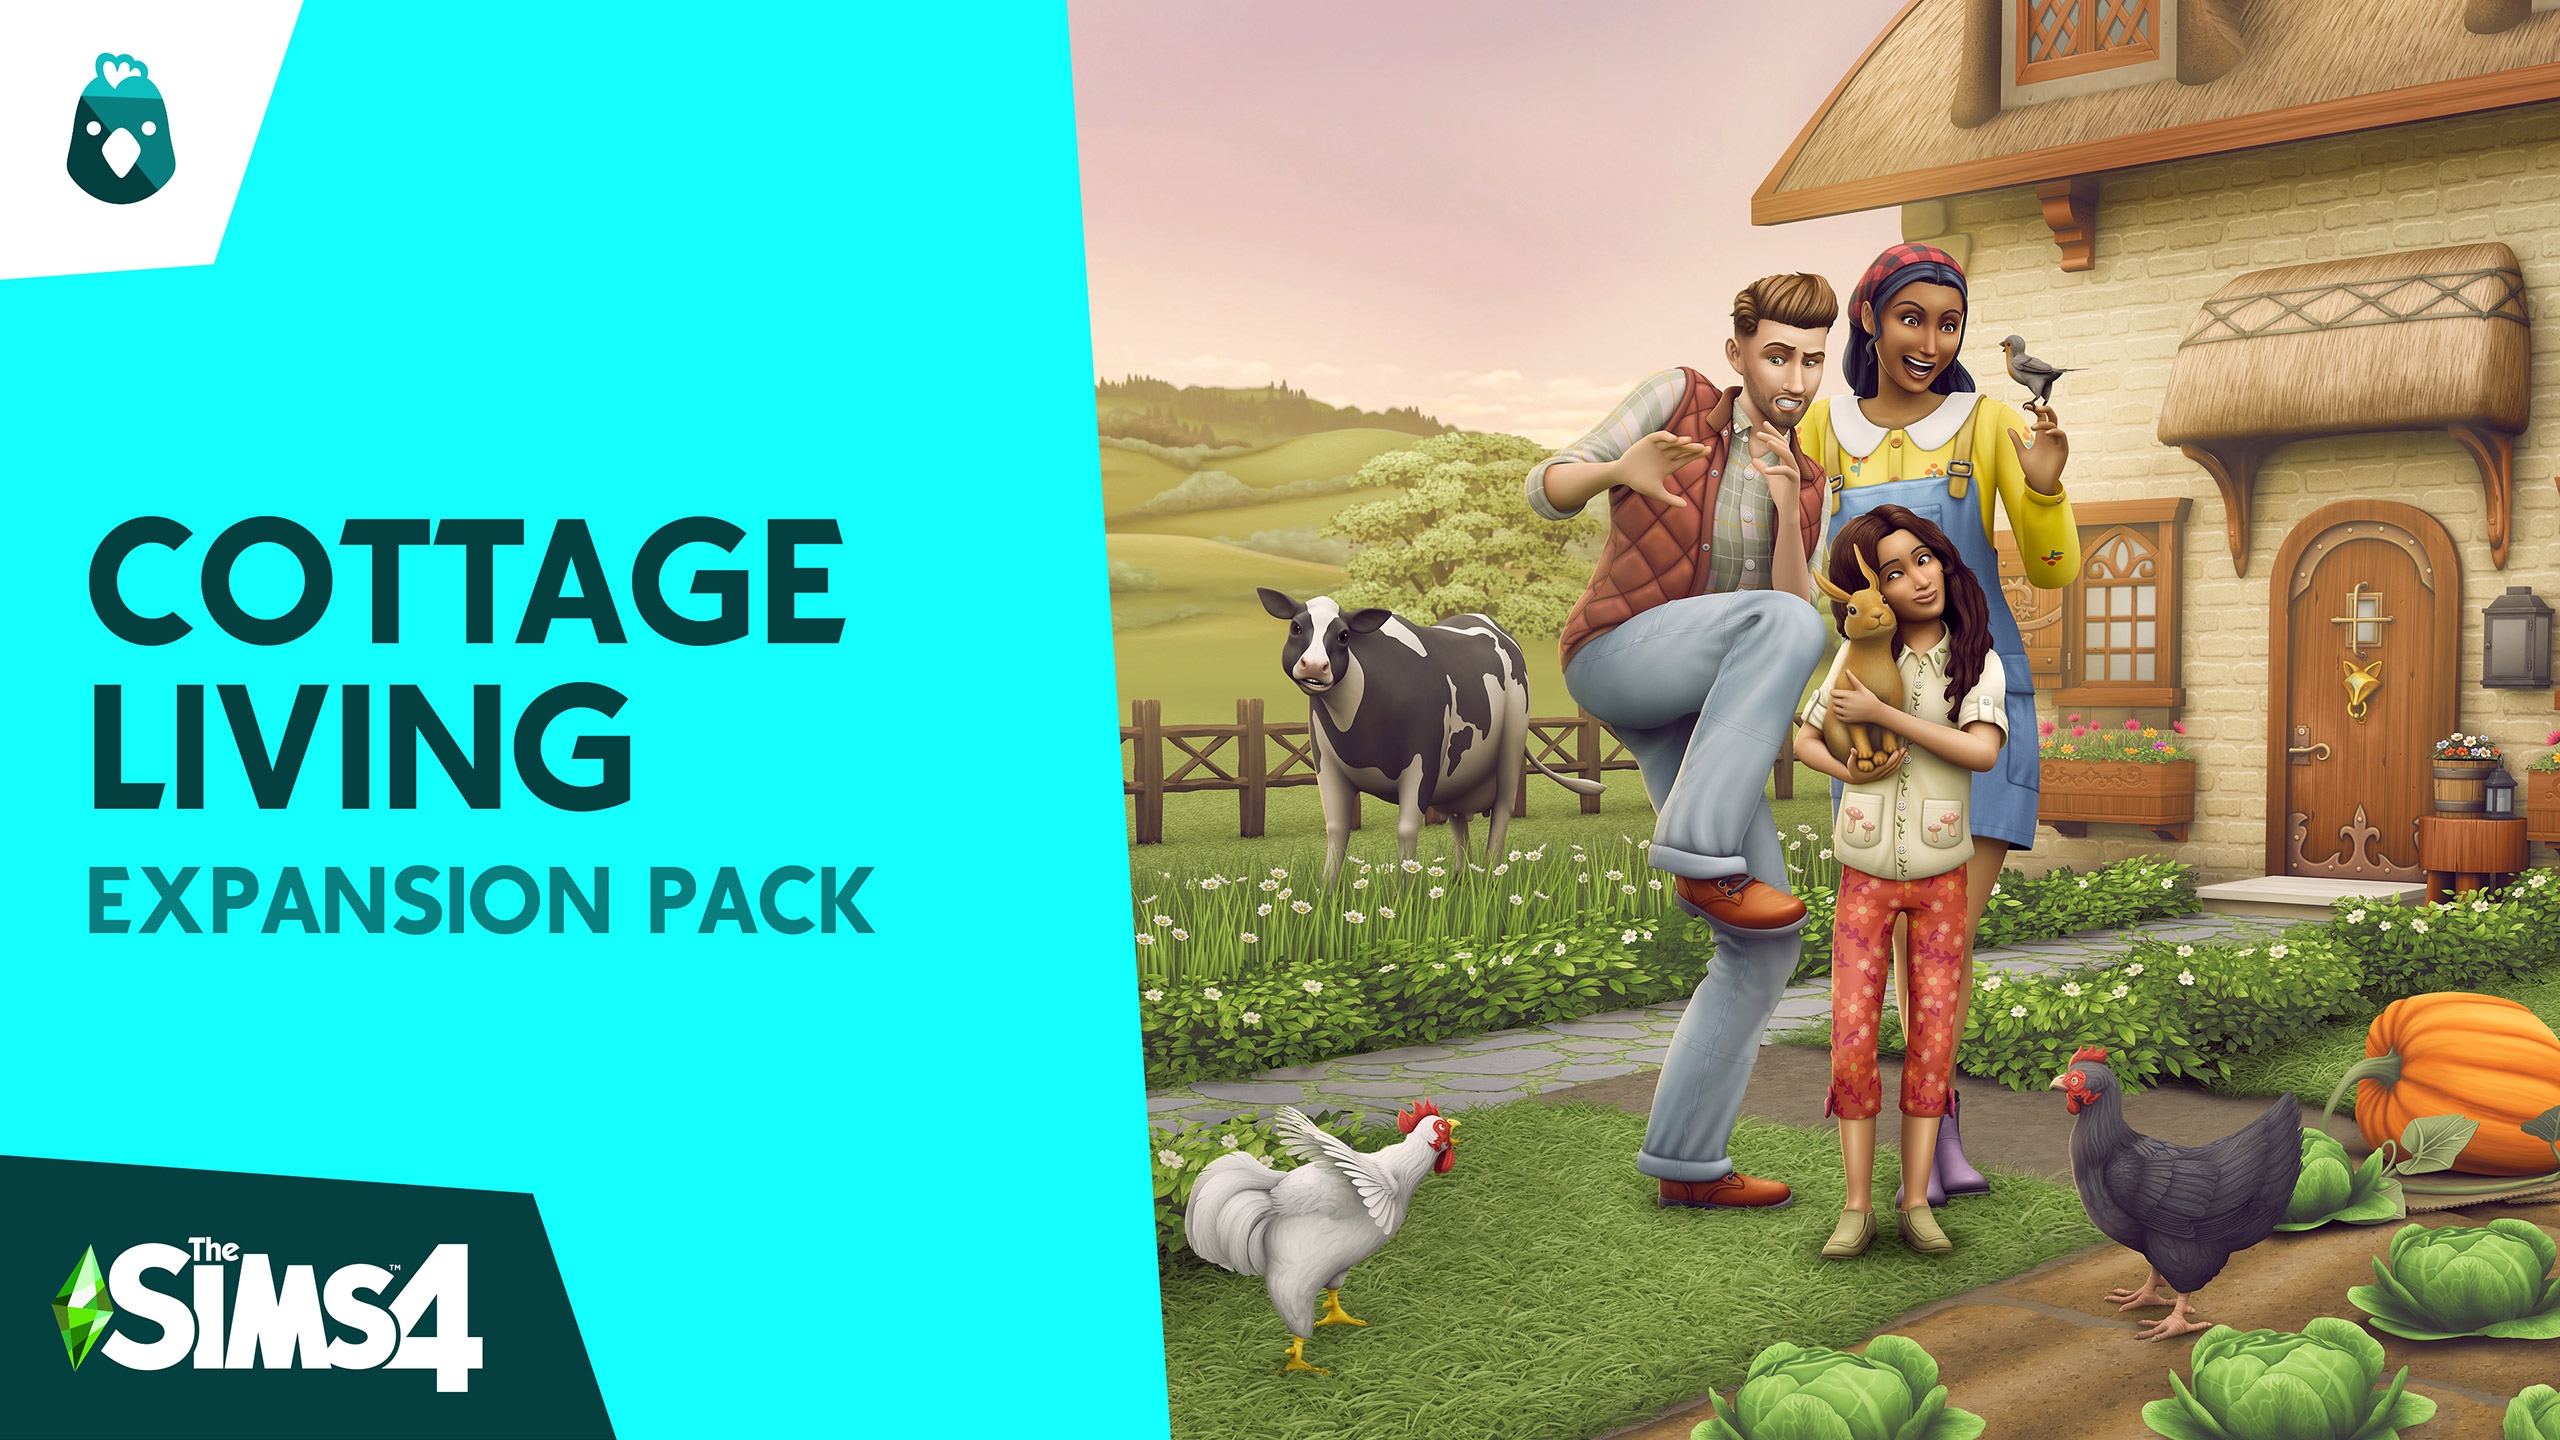 The Sims 4 - Dodatek - Expansion Pack - Wiejska sielanka - Cottage living